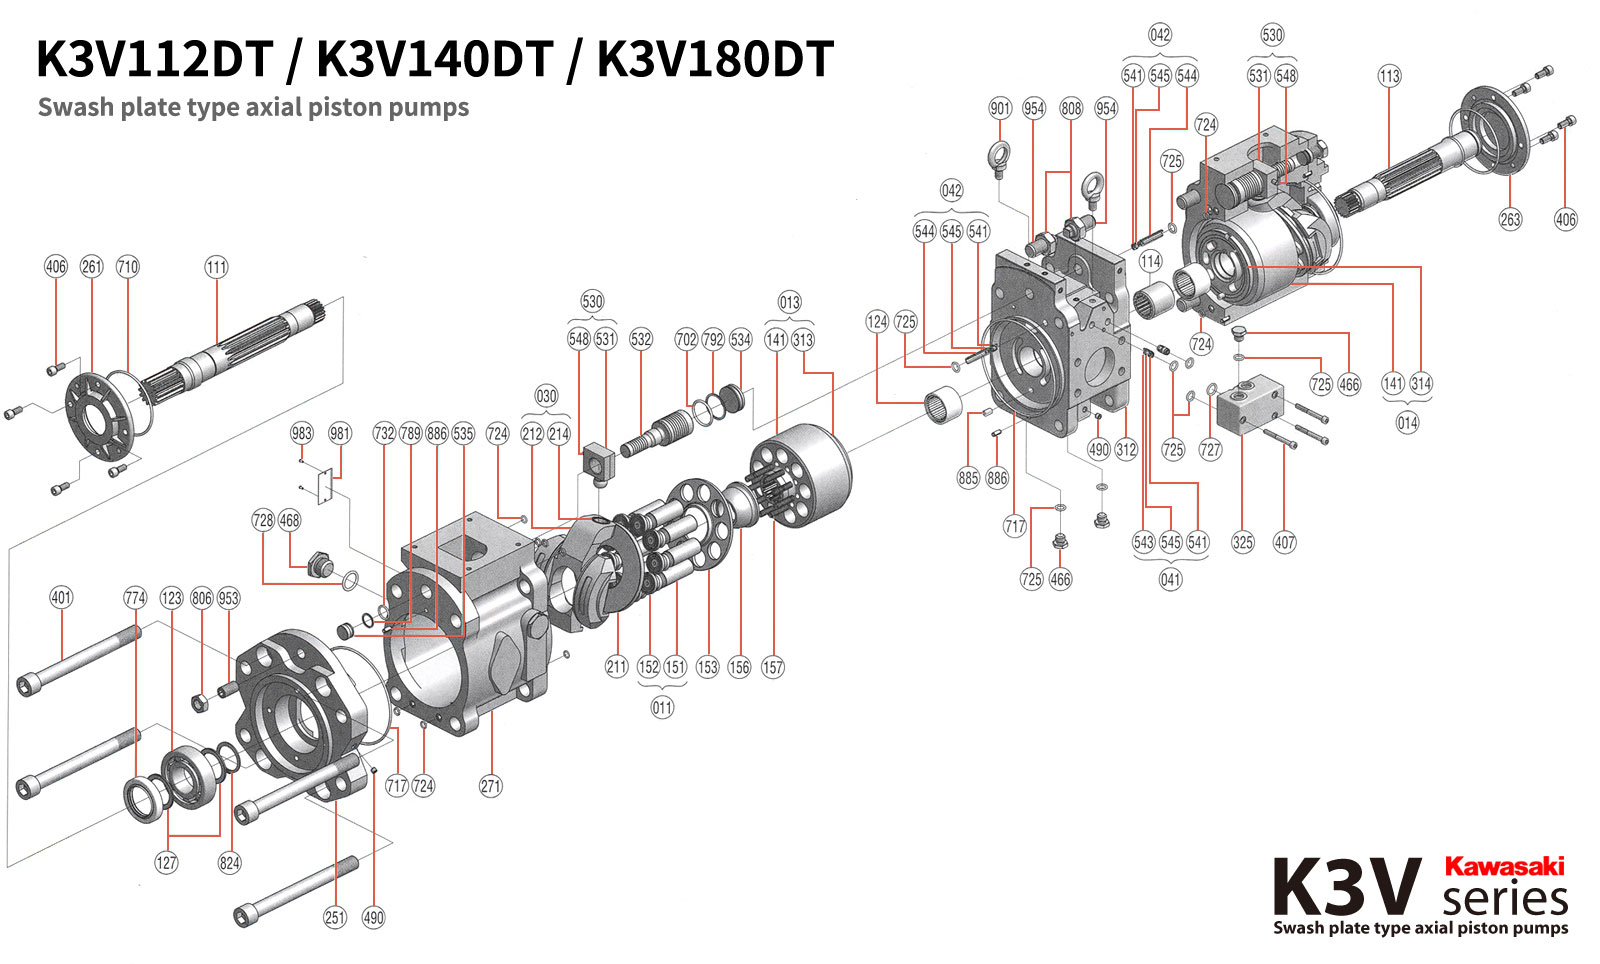 V 112. Kawasaki k3v112dt схема. K3v112dt основной распределительный клапан. Насос Kawasaki k3v112dt. Kawasaki Hydraulic Pump k3v112dt-1x8r-9ne4-v чертеж.